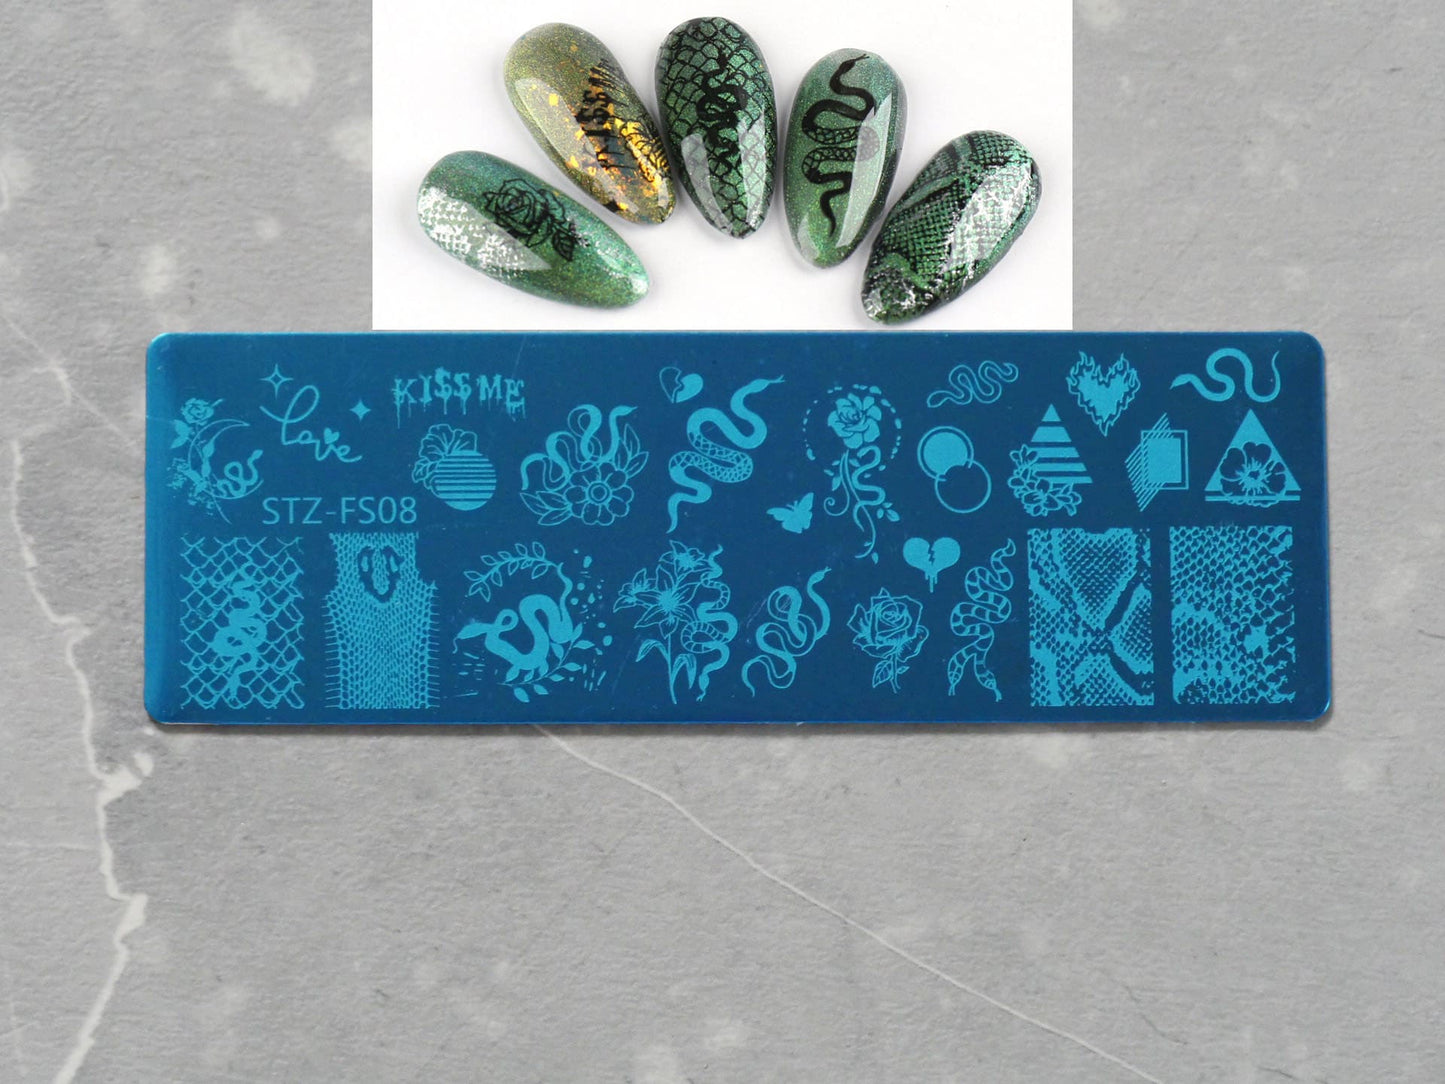 Snake Spiritual England lattice Nail Art Stamping Image Plates/ Diamond Check Nature Manicure Nail Designs DIY Stamping Templates